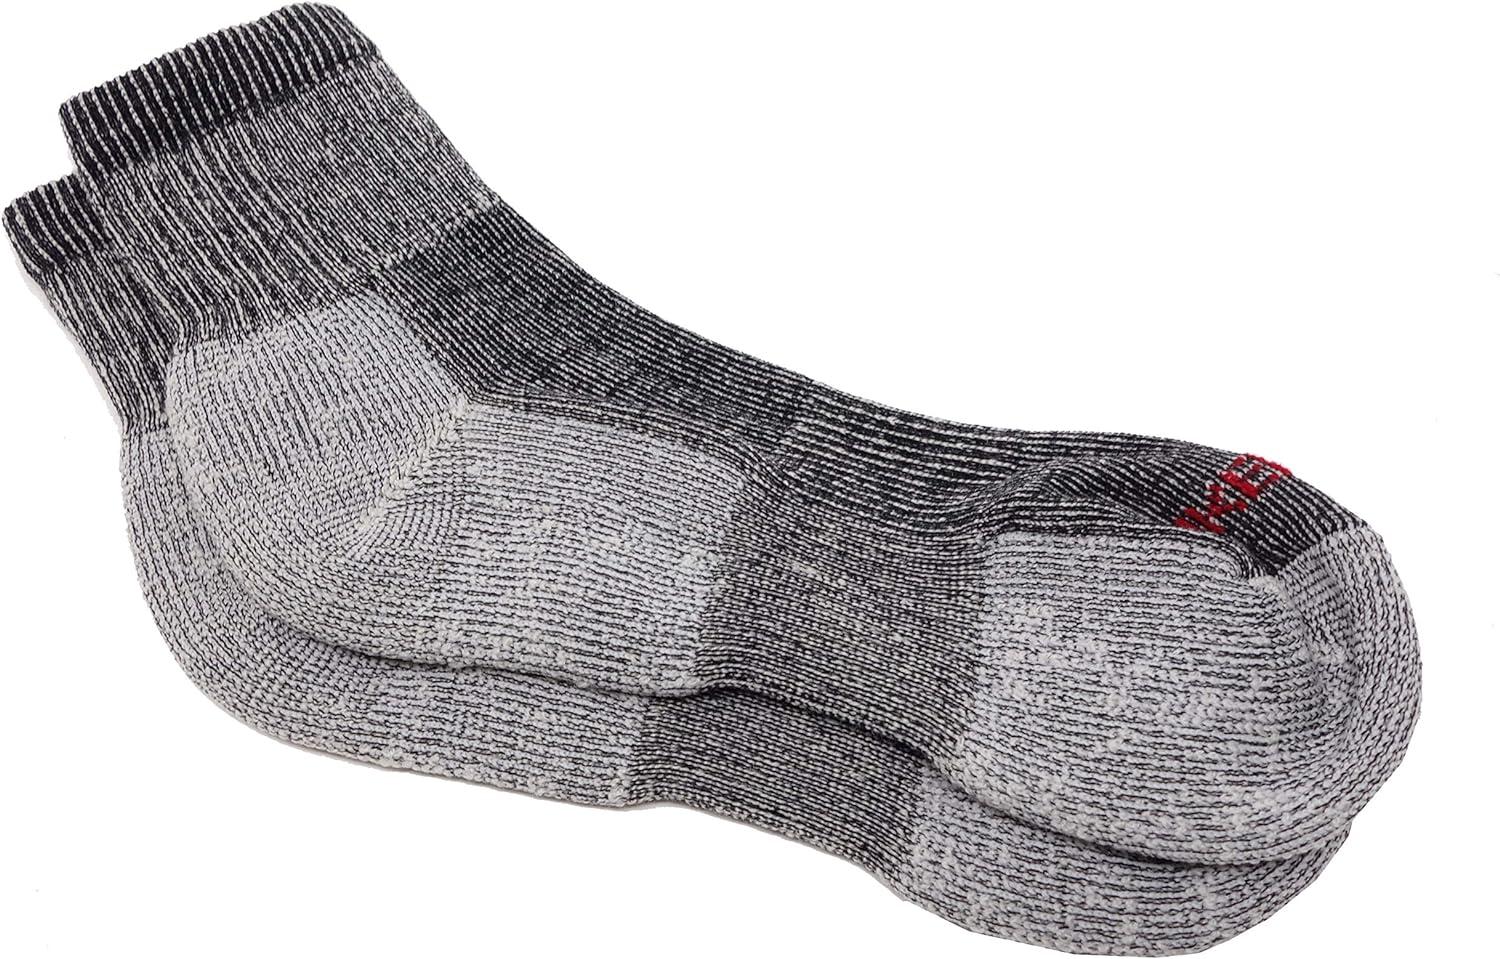 J.B. Field's 74% Merino Wool Hiking Socks for Men & Women for Fall Summer  Trekking & Outdoor 3-Pack Made in Canada Medium Black